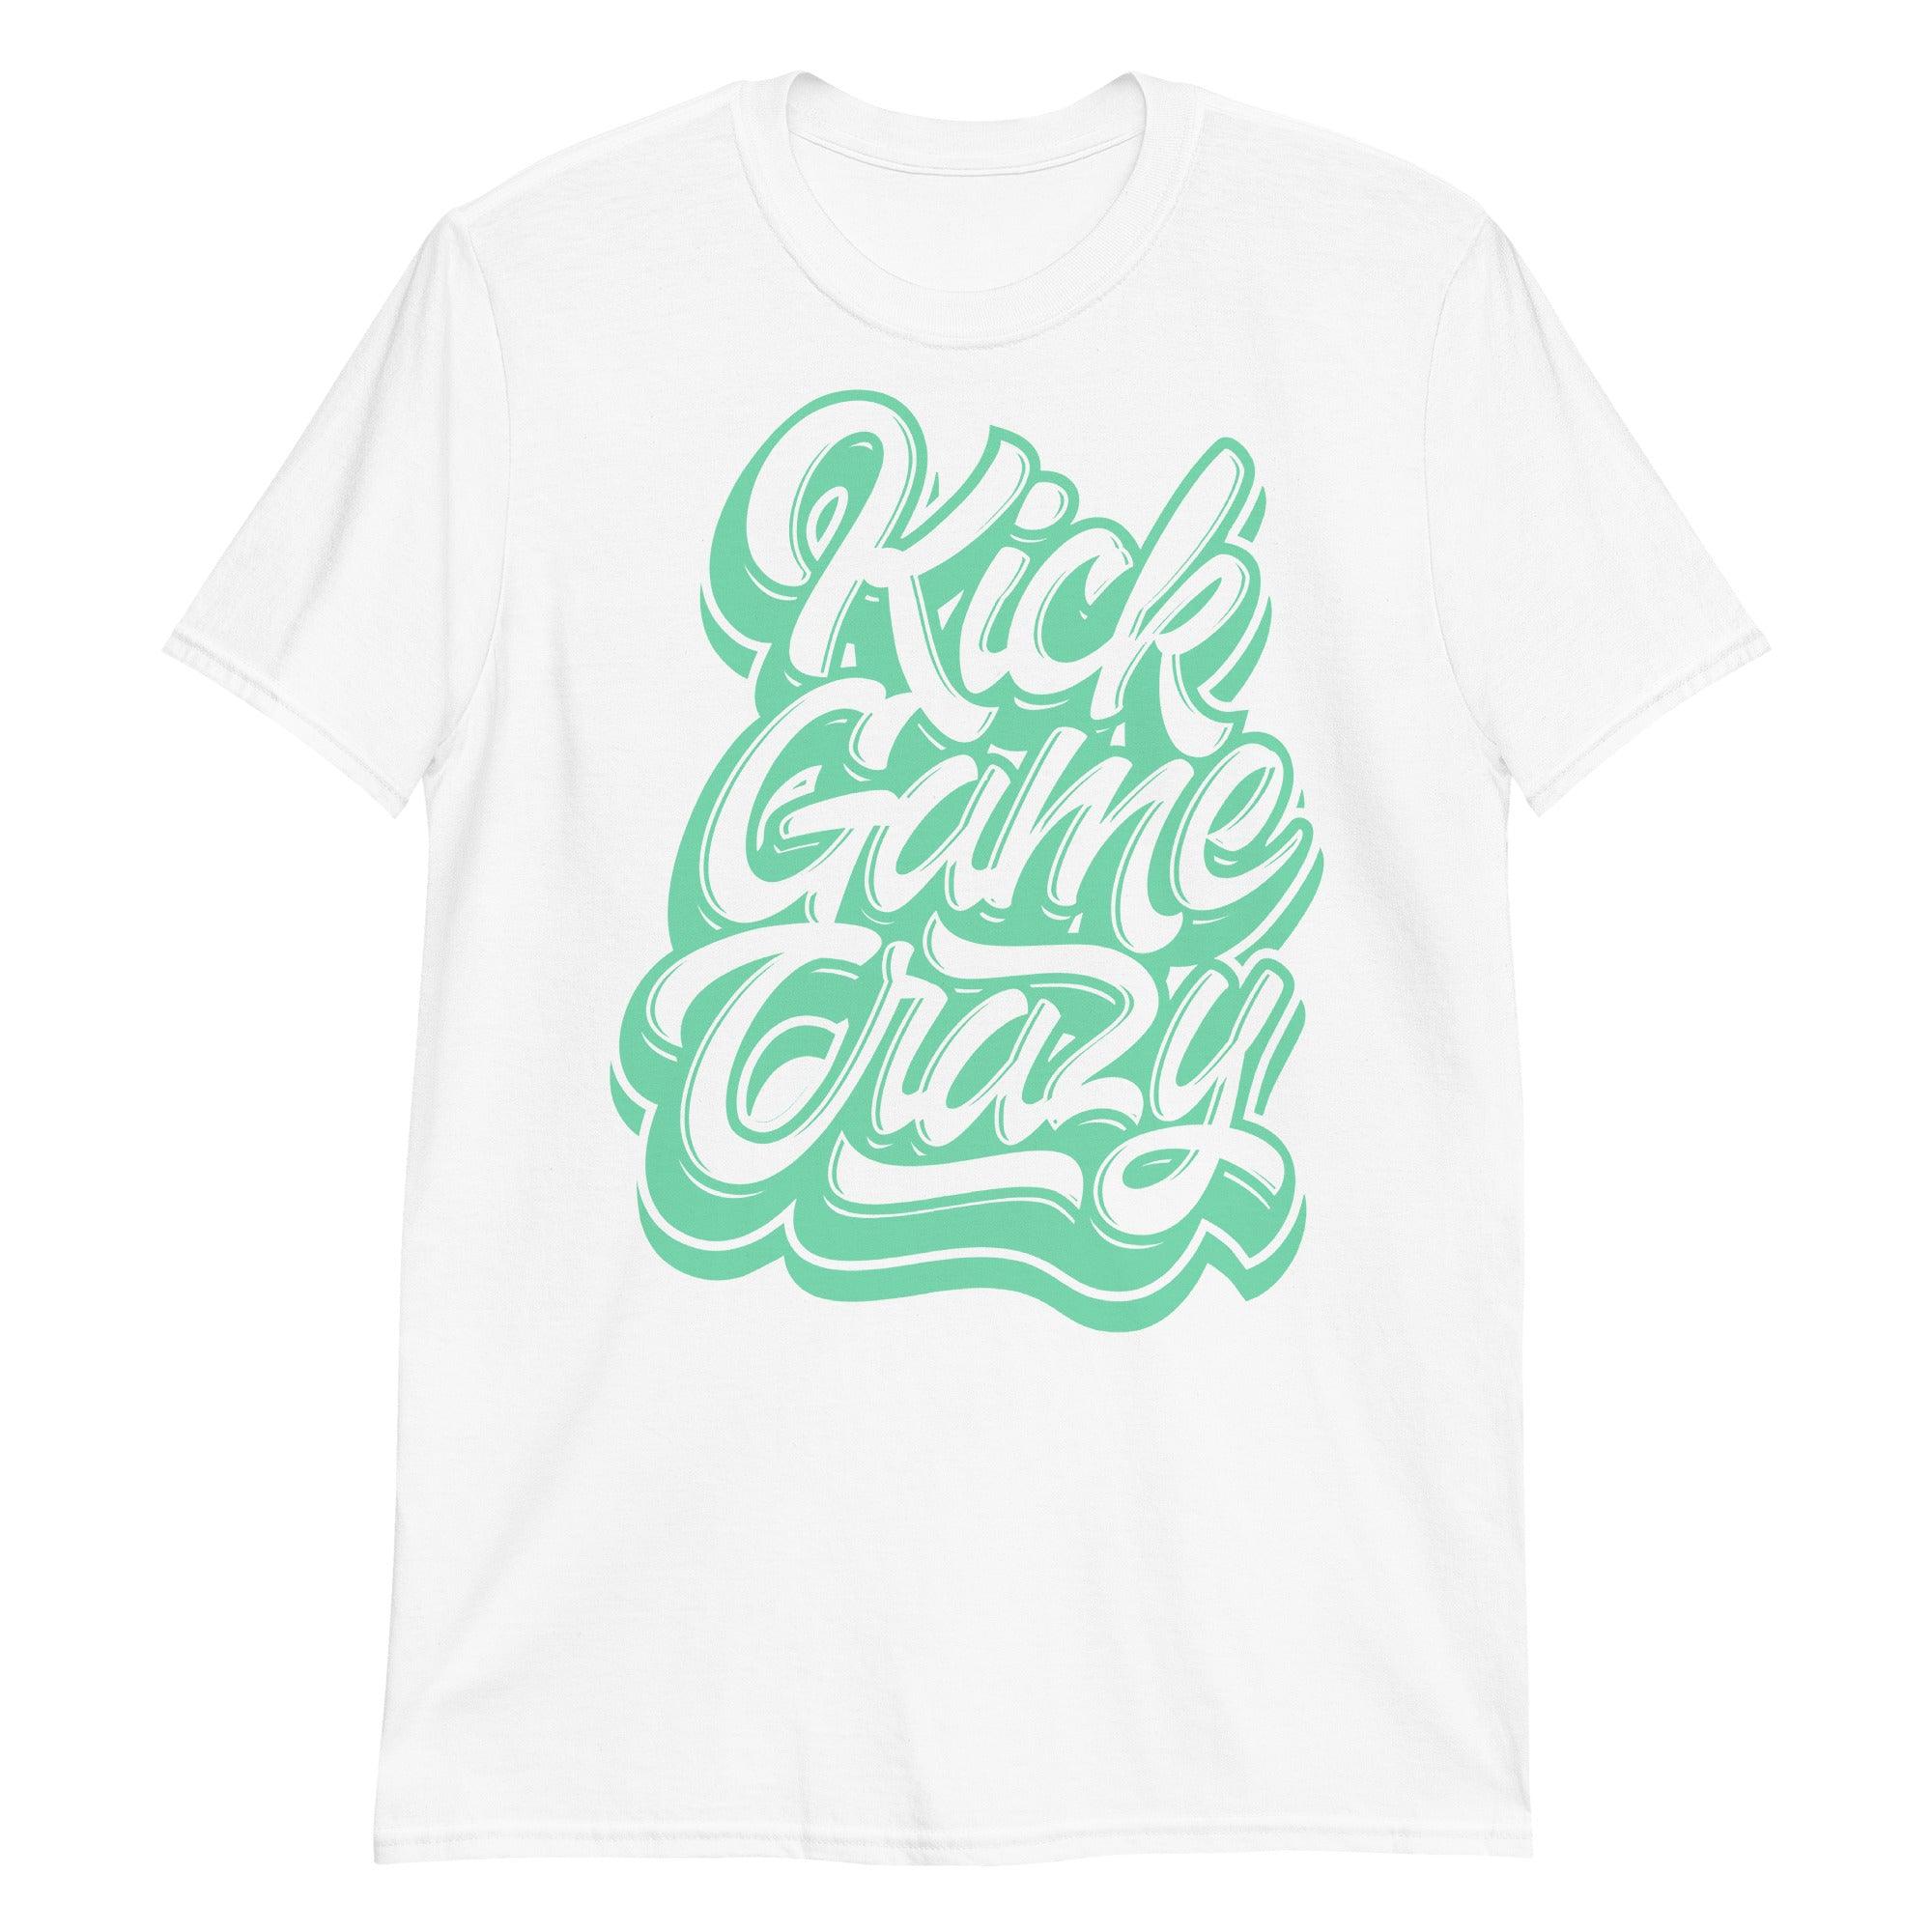 White Kick Game Crazy Shirt Nike Dunk Low Green Glow photo